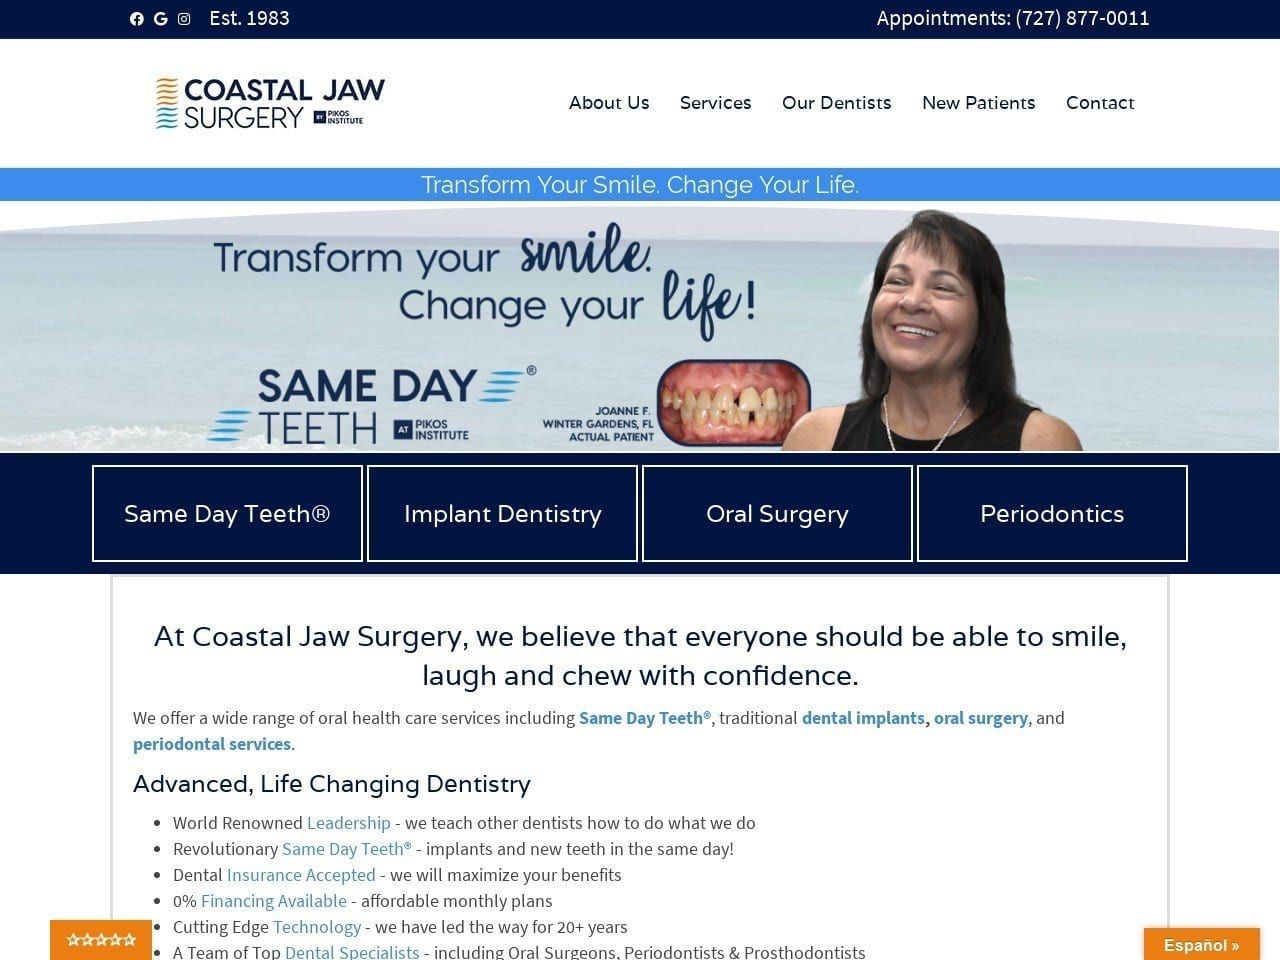 Coastal Jaw Surgery Website Screenshot from coastaljaw.com